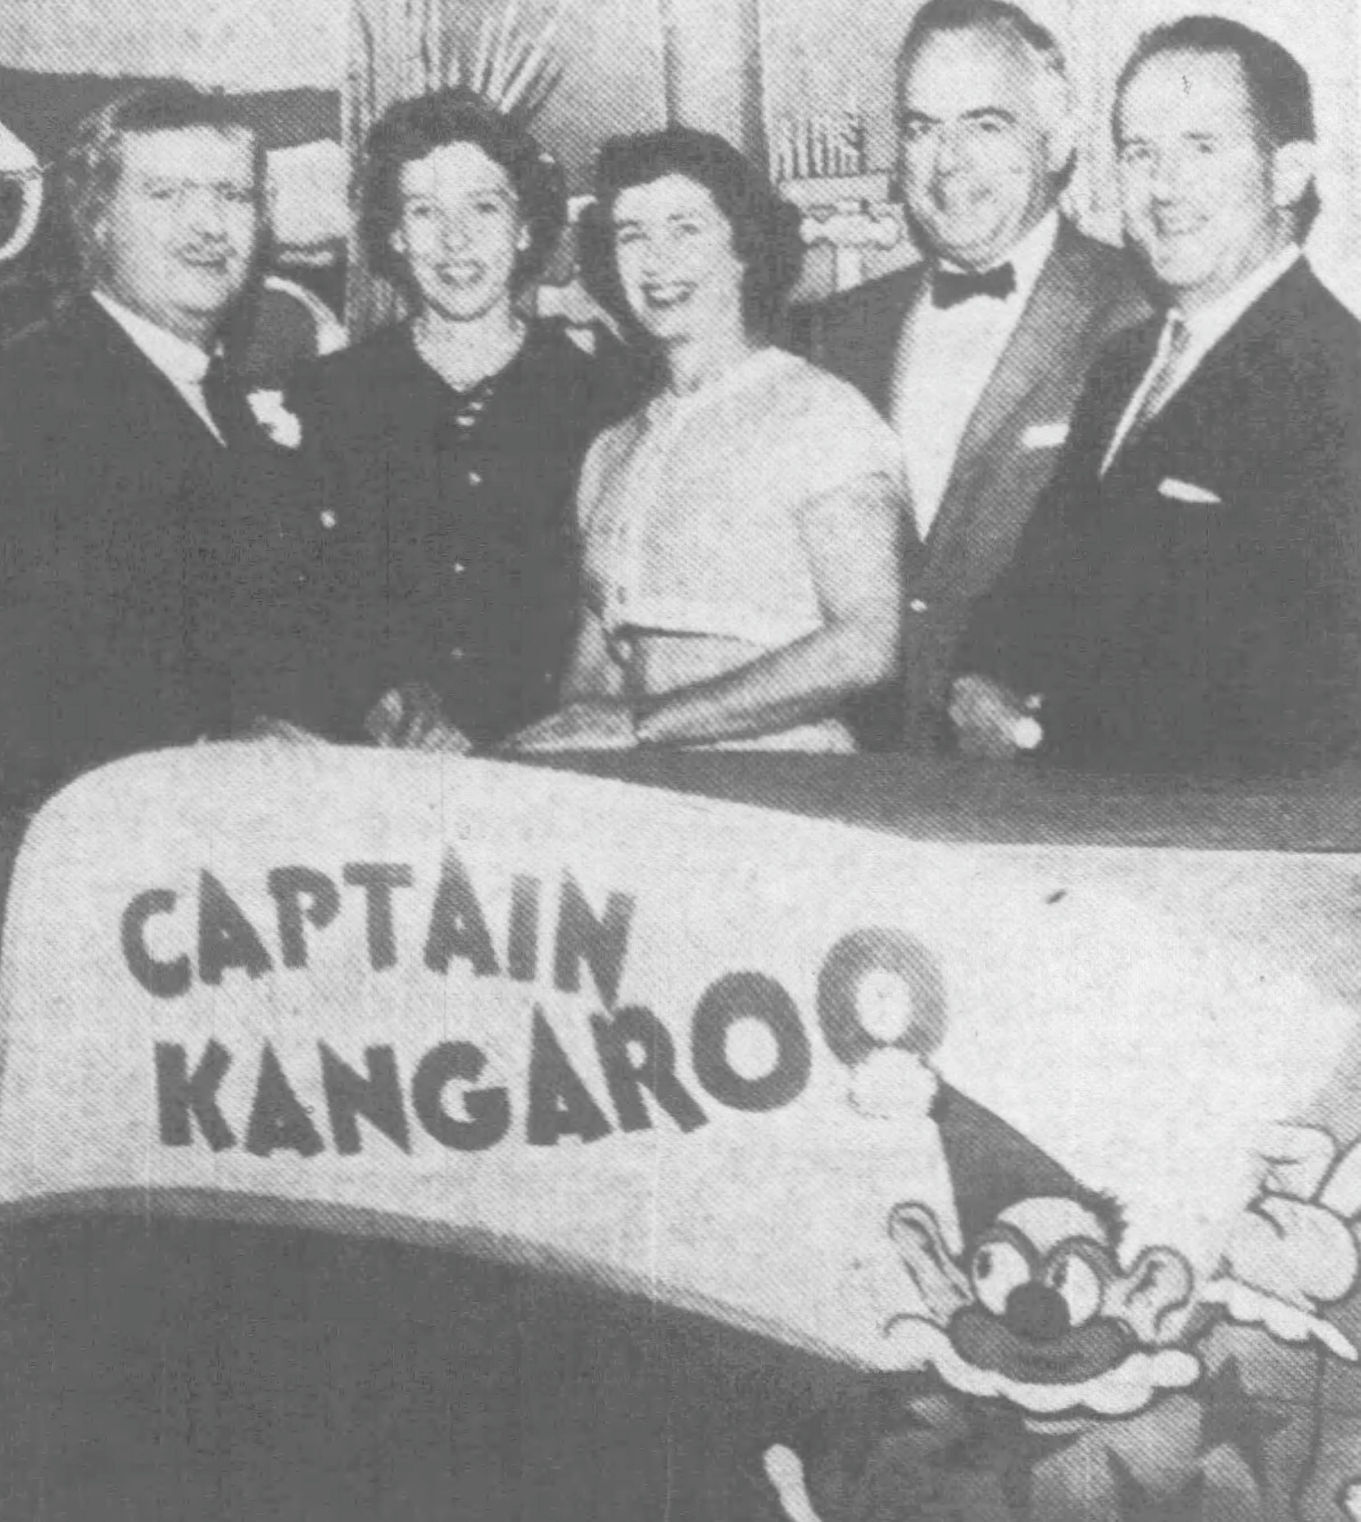 captain kangaroo